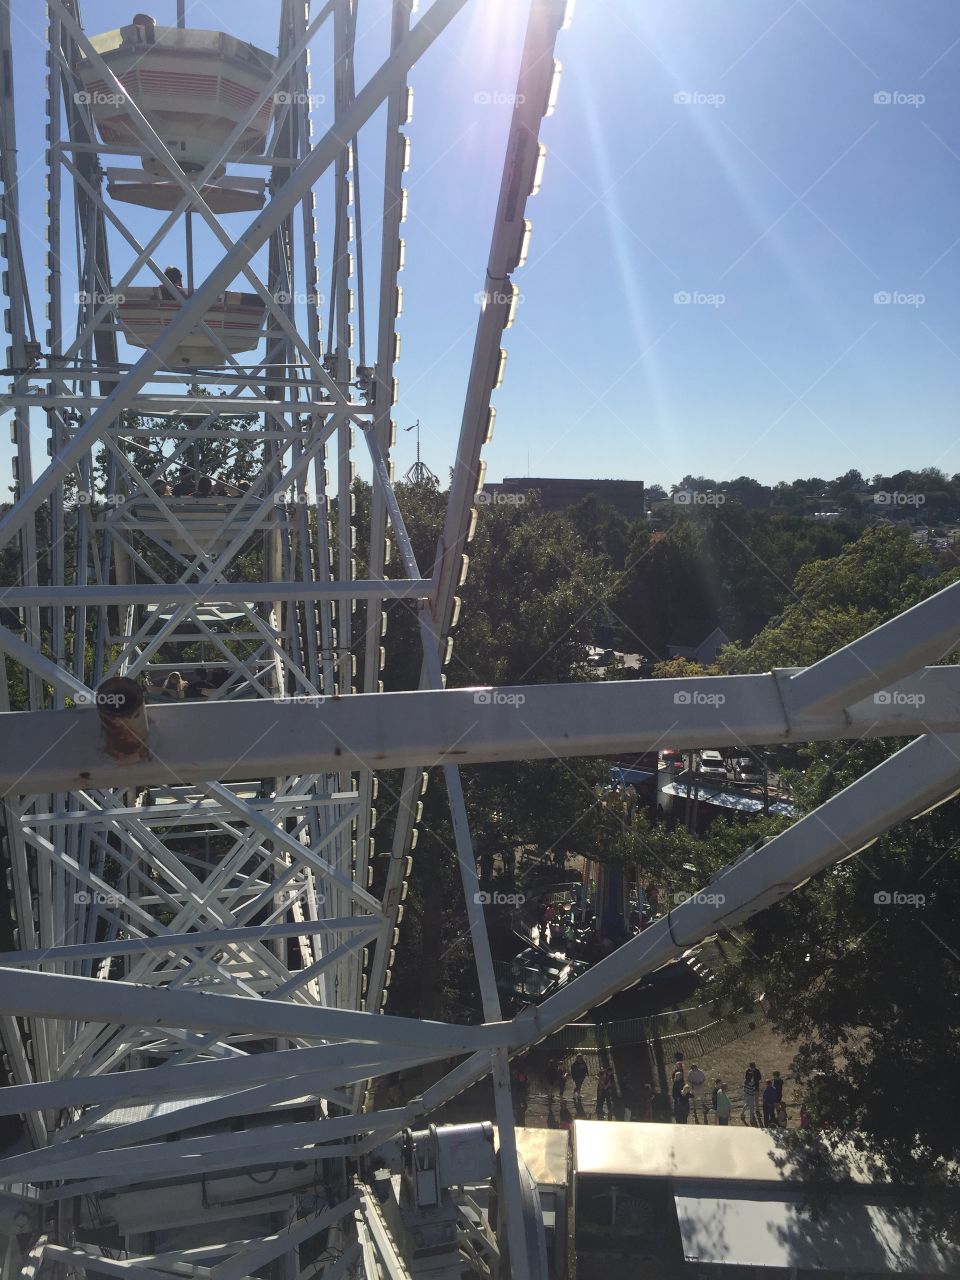 Fall festival Ferris wheel